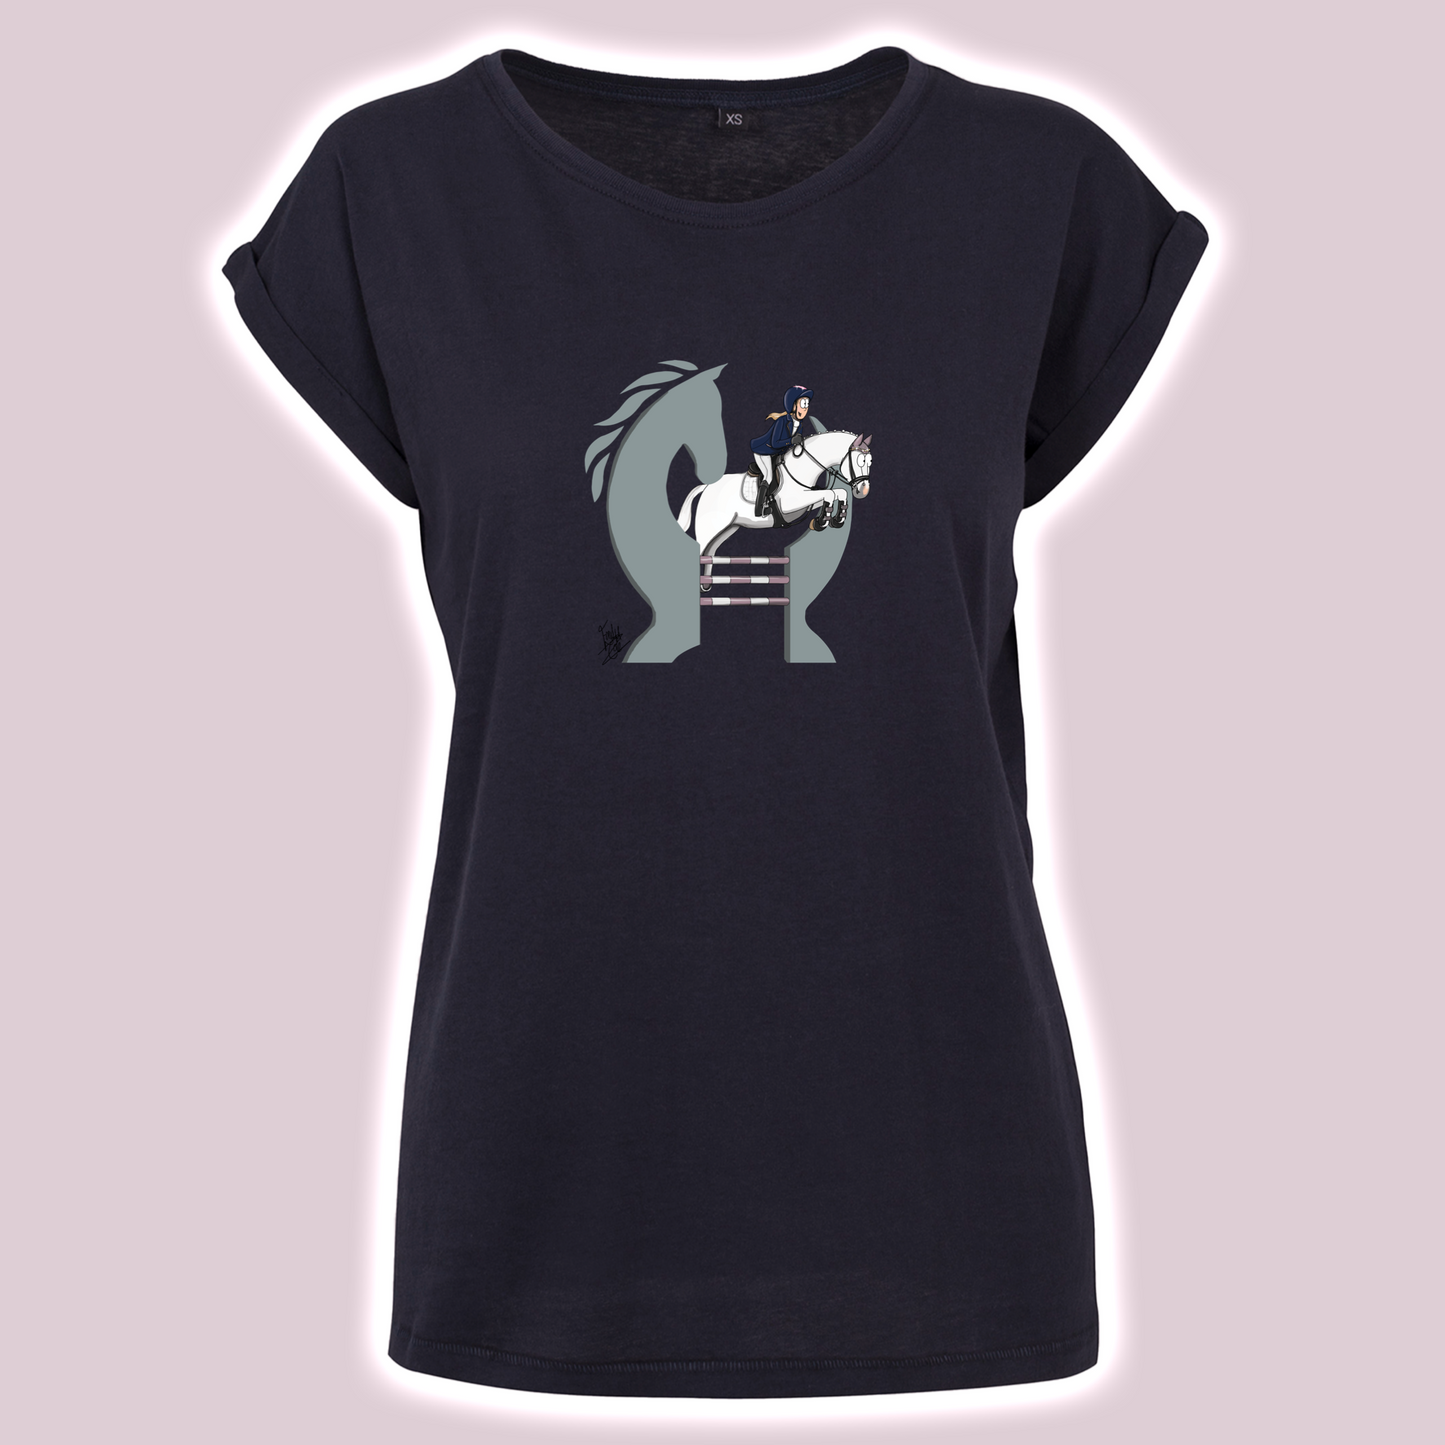 Equiboodle Emily Cole Hotshot T Shirt - Show Jumping Grey